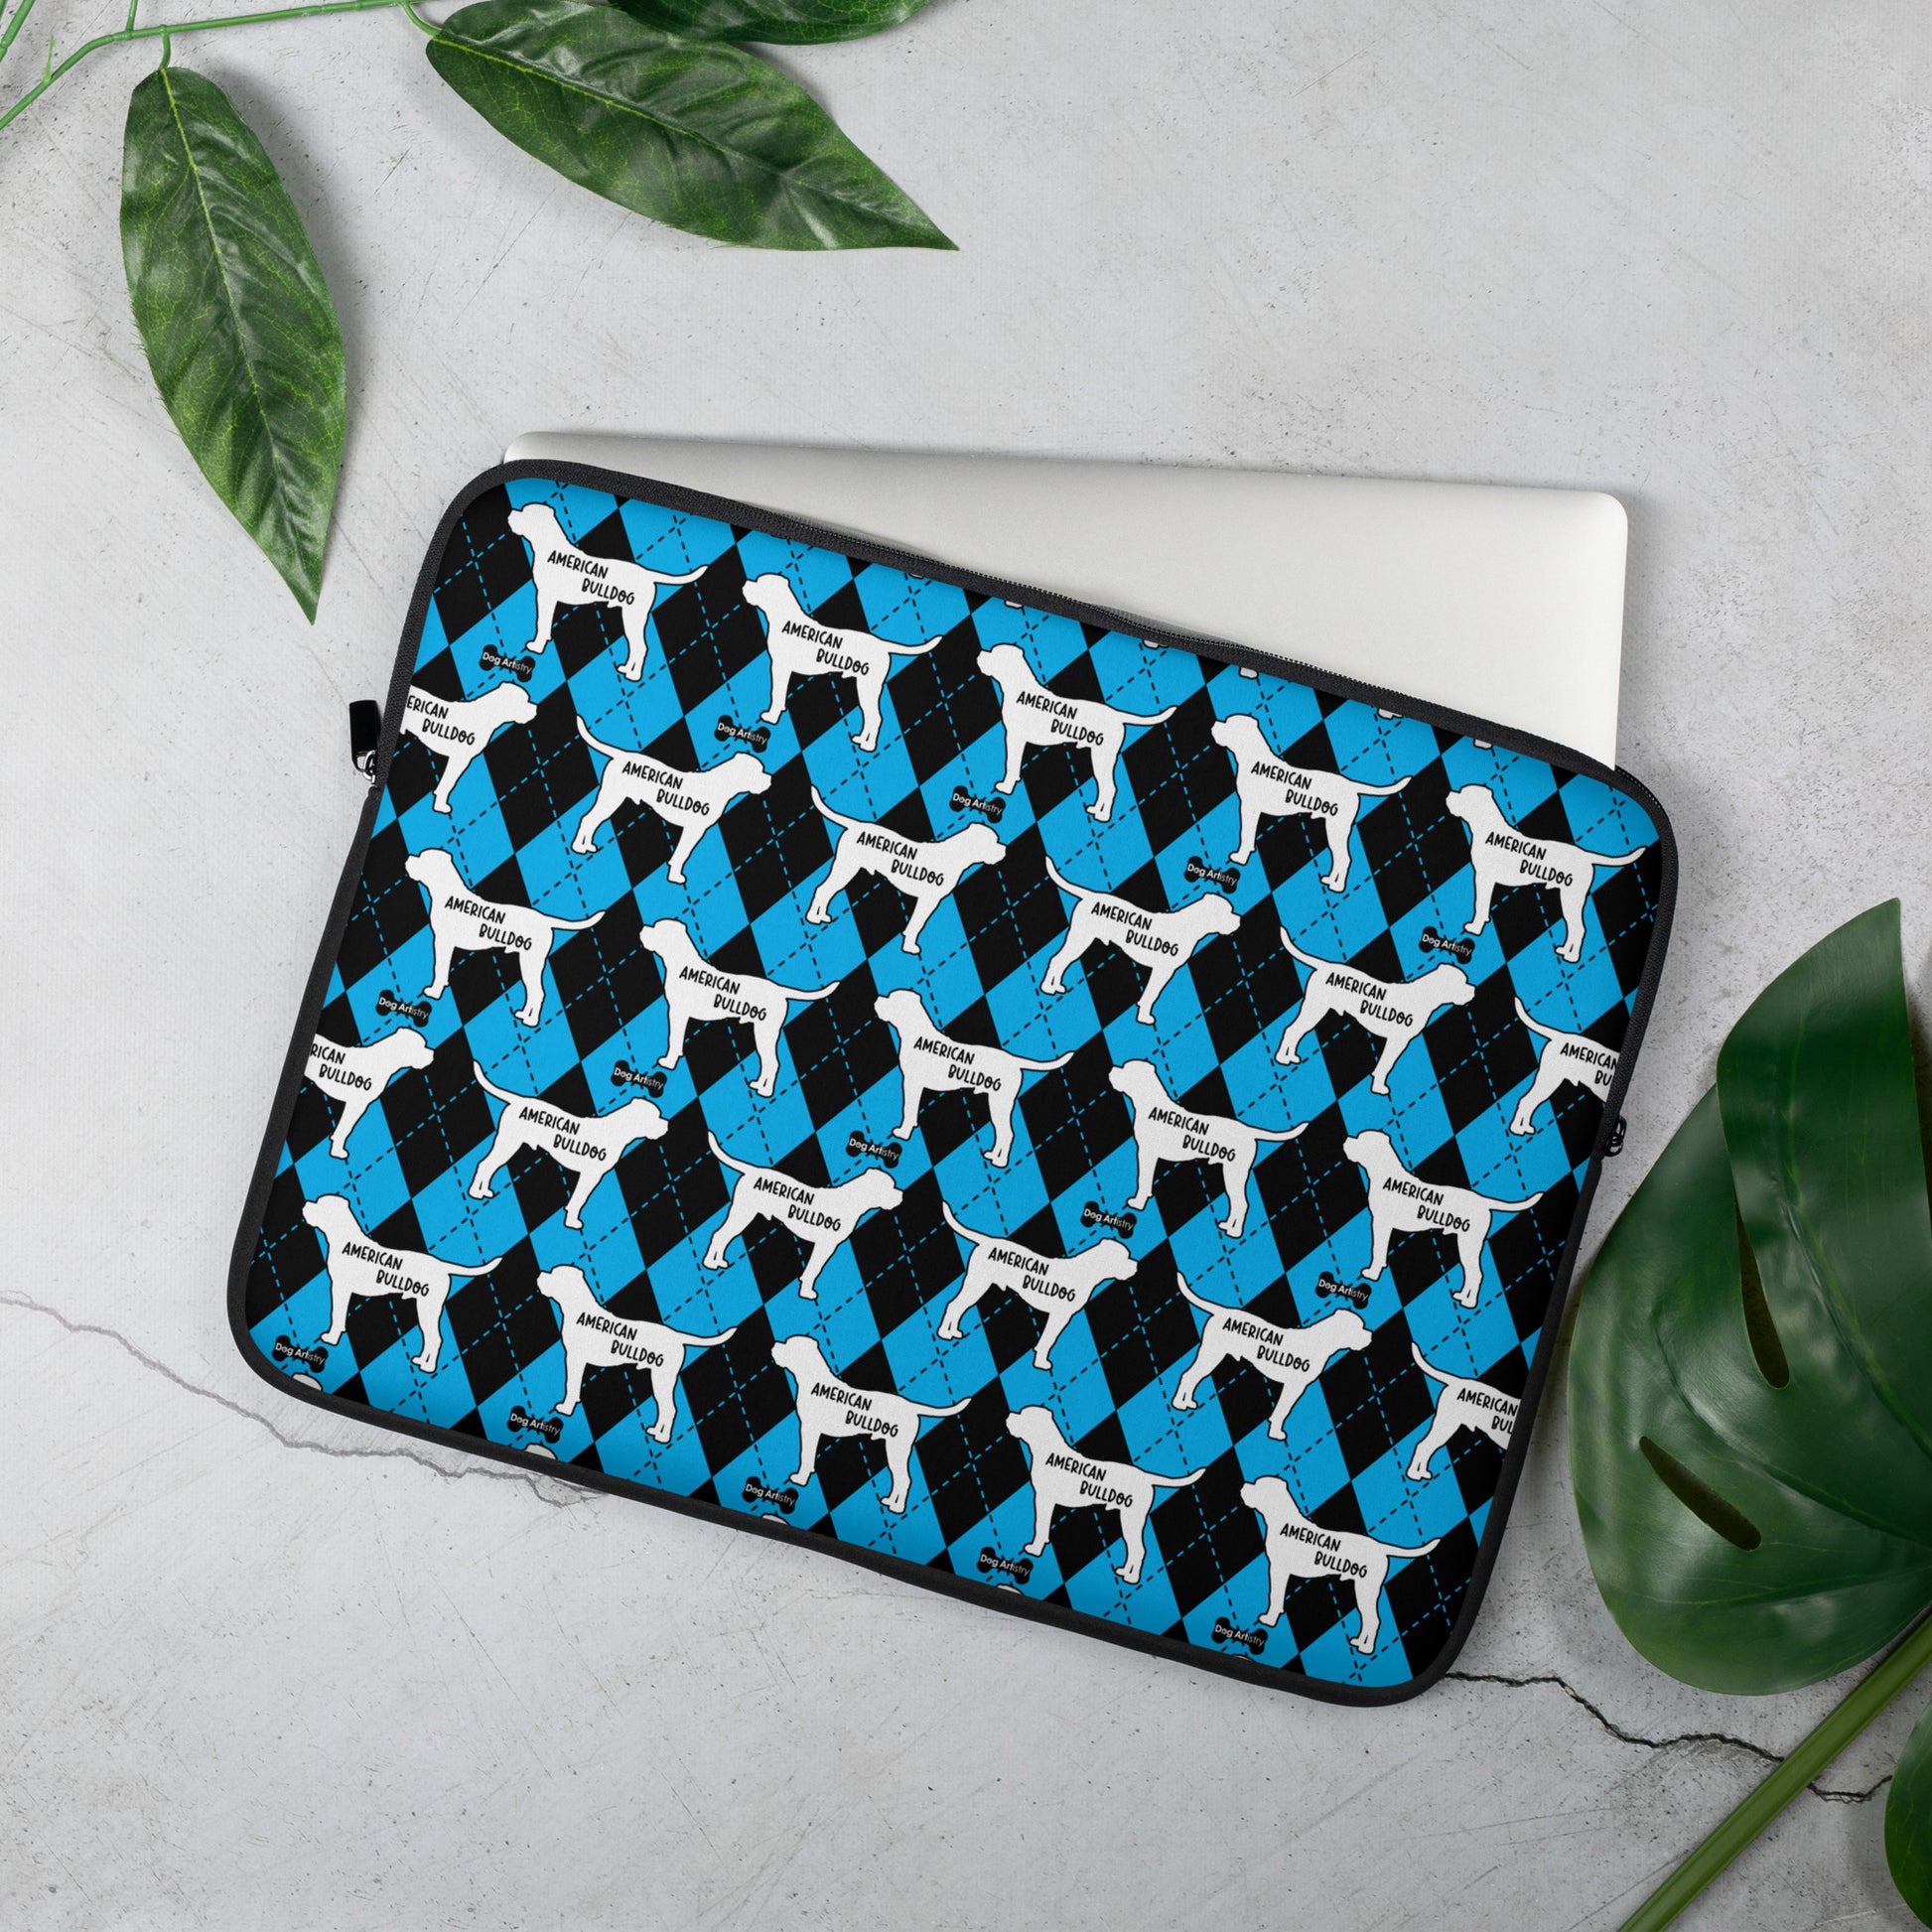 American Bulldog blue and black argyle laptop sleeve by Dog Artistry